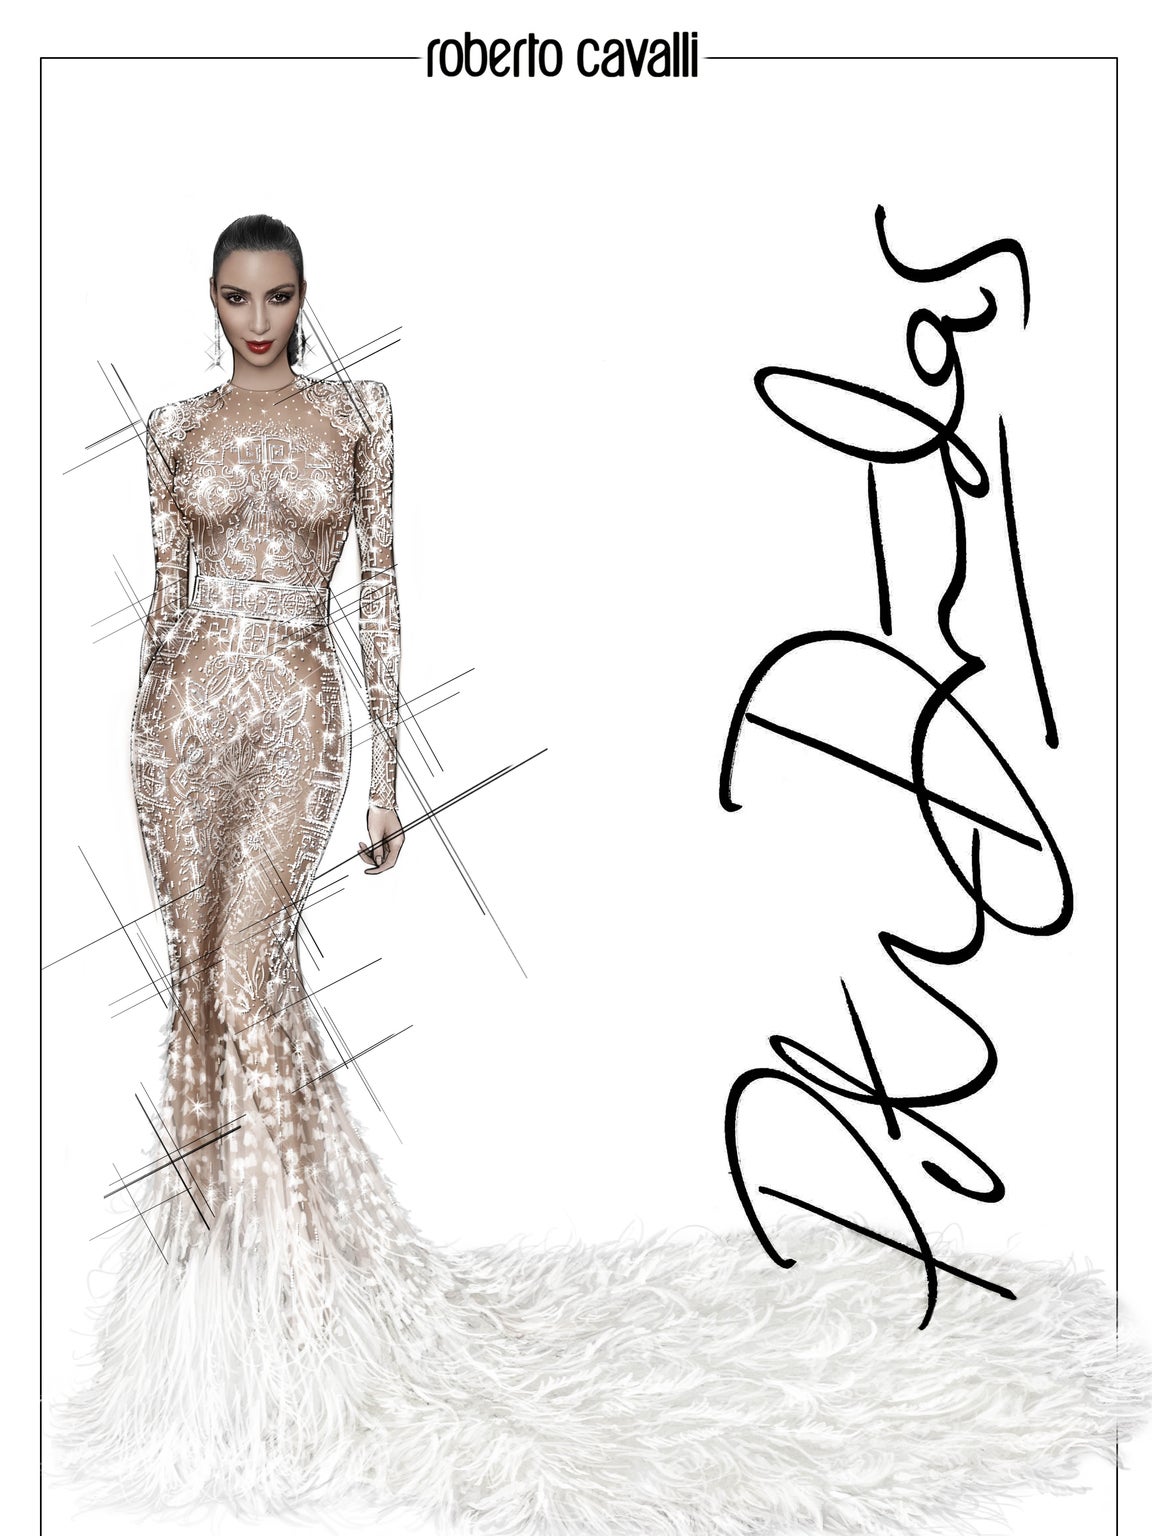 A sketch of the dress designed by Peter Dundas at Roberto Cavalli for Kim Kardashian